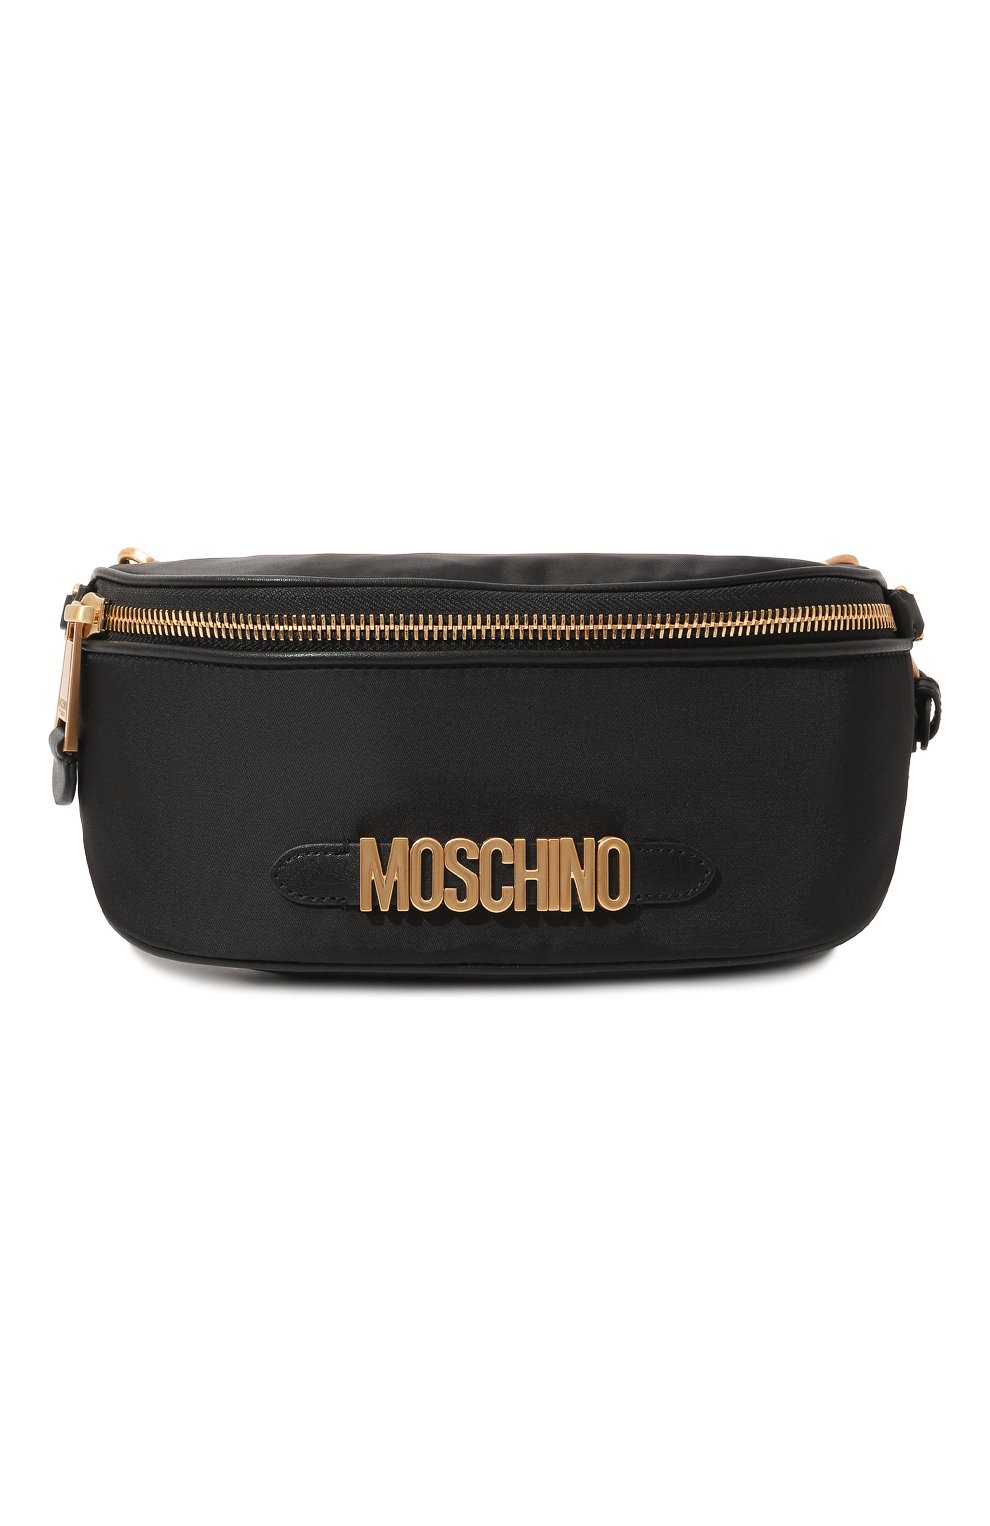 Поясная сумка Belt Moschino 2317 B7707/8202, цвет чёрный, размер NS